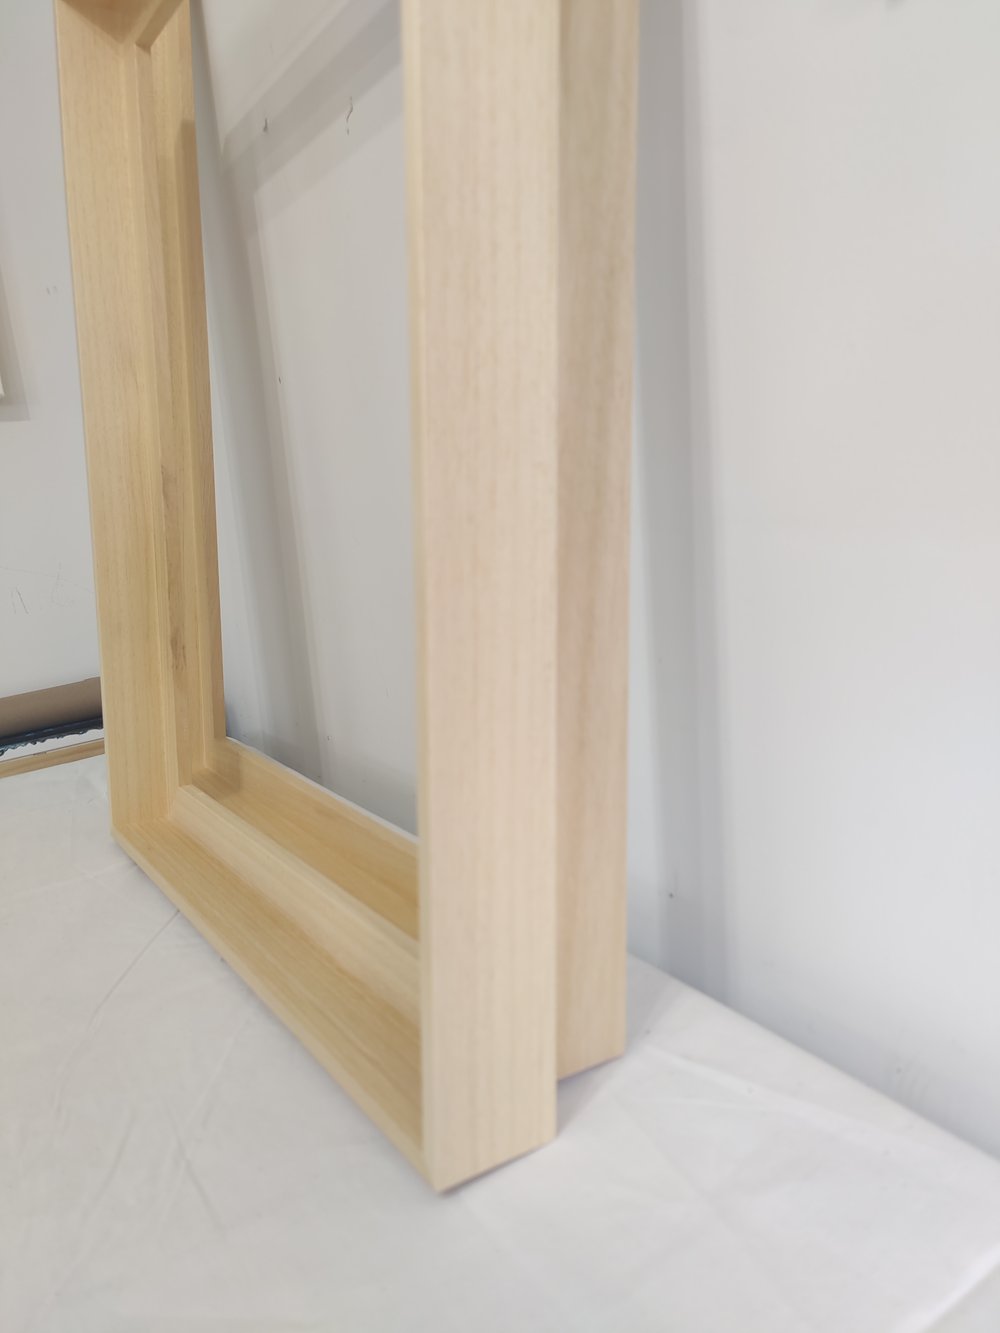 Custom Natural Wood Floater Frame: 24 x 30 — Rachel Reinert